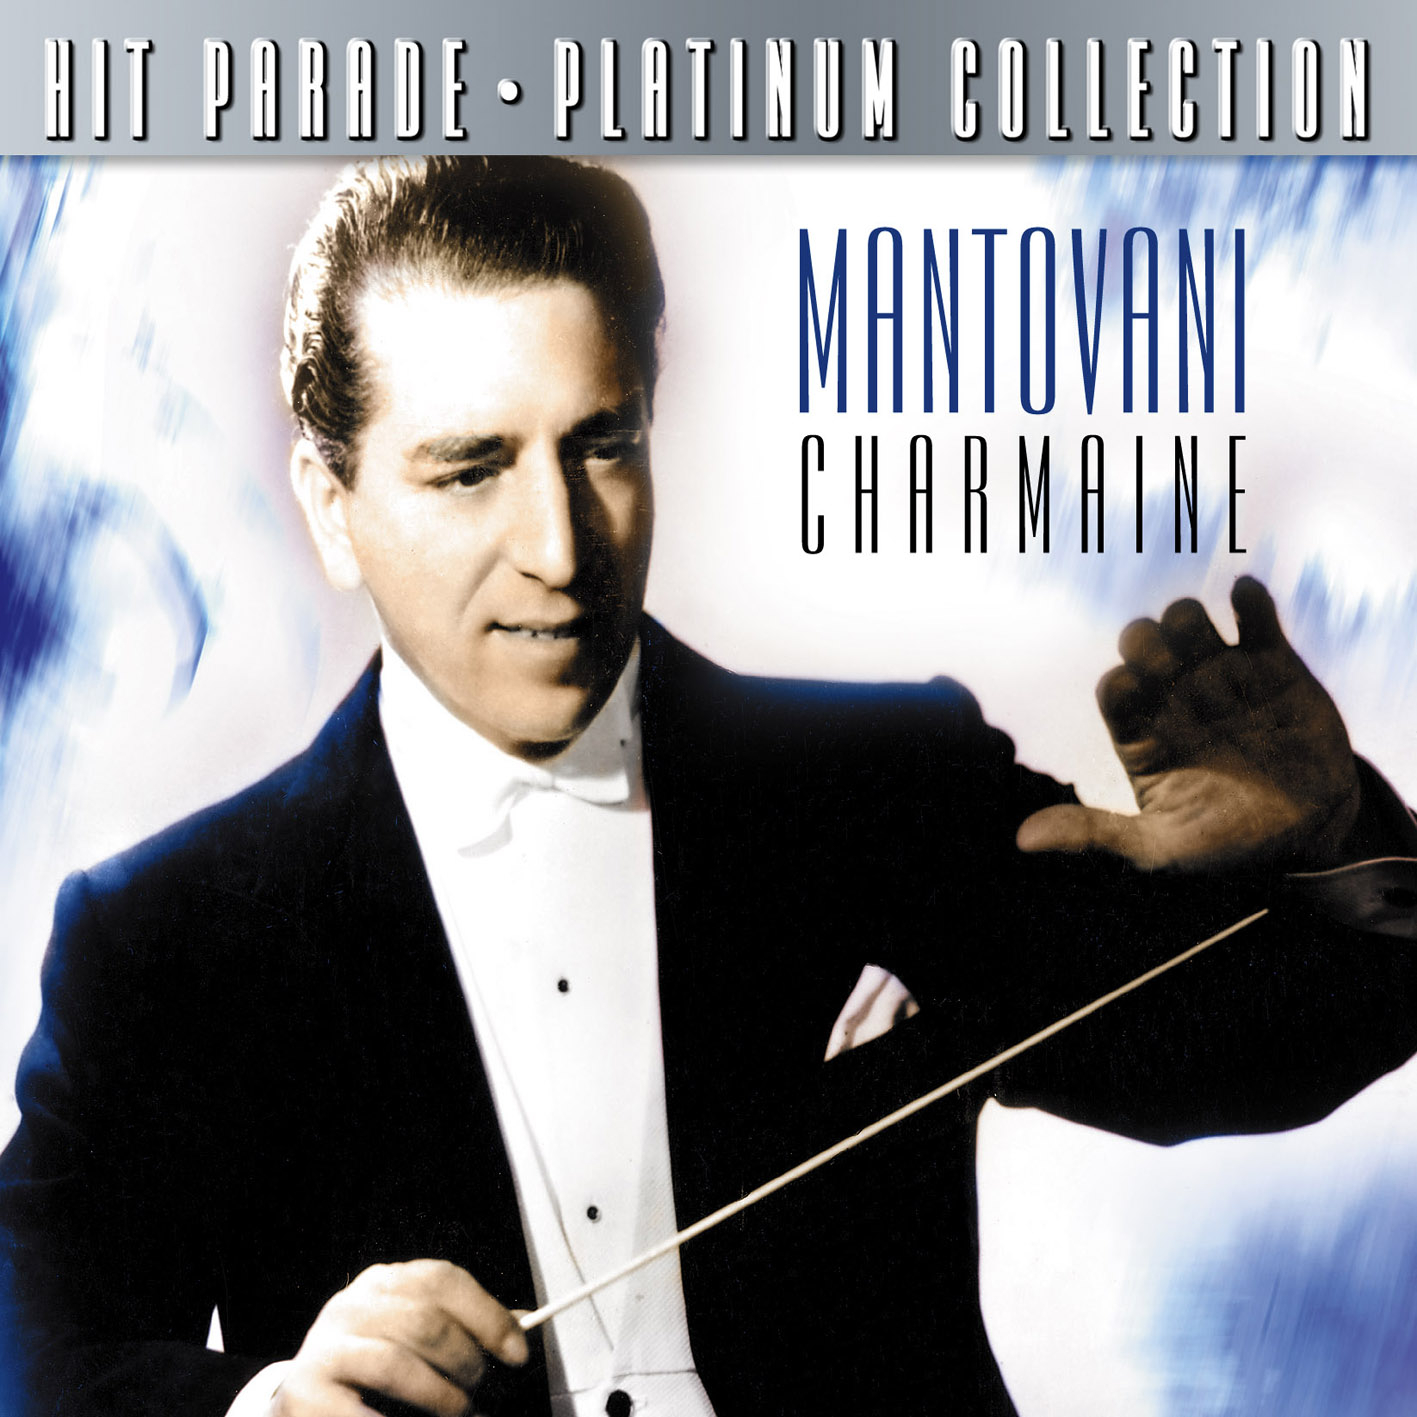 Hit Parade Platinum Collection Mantovani Charmaine